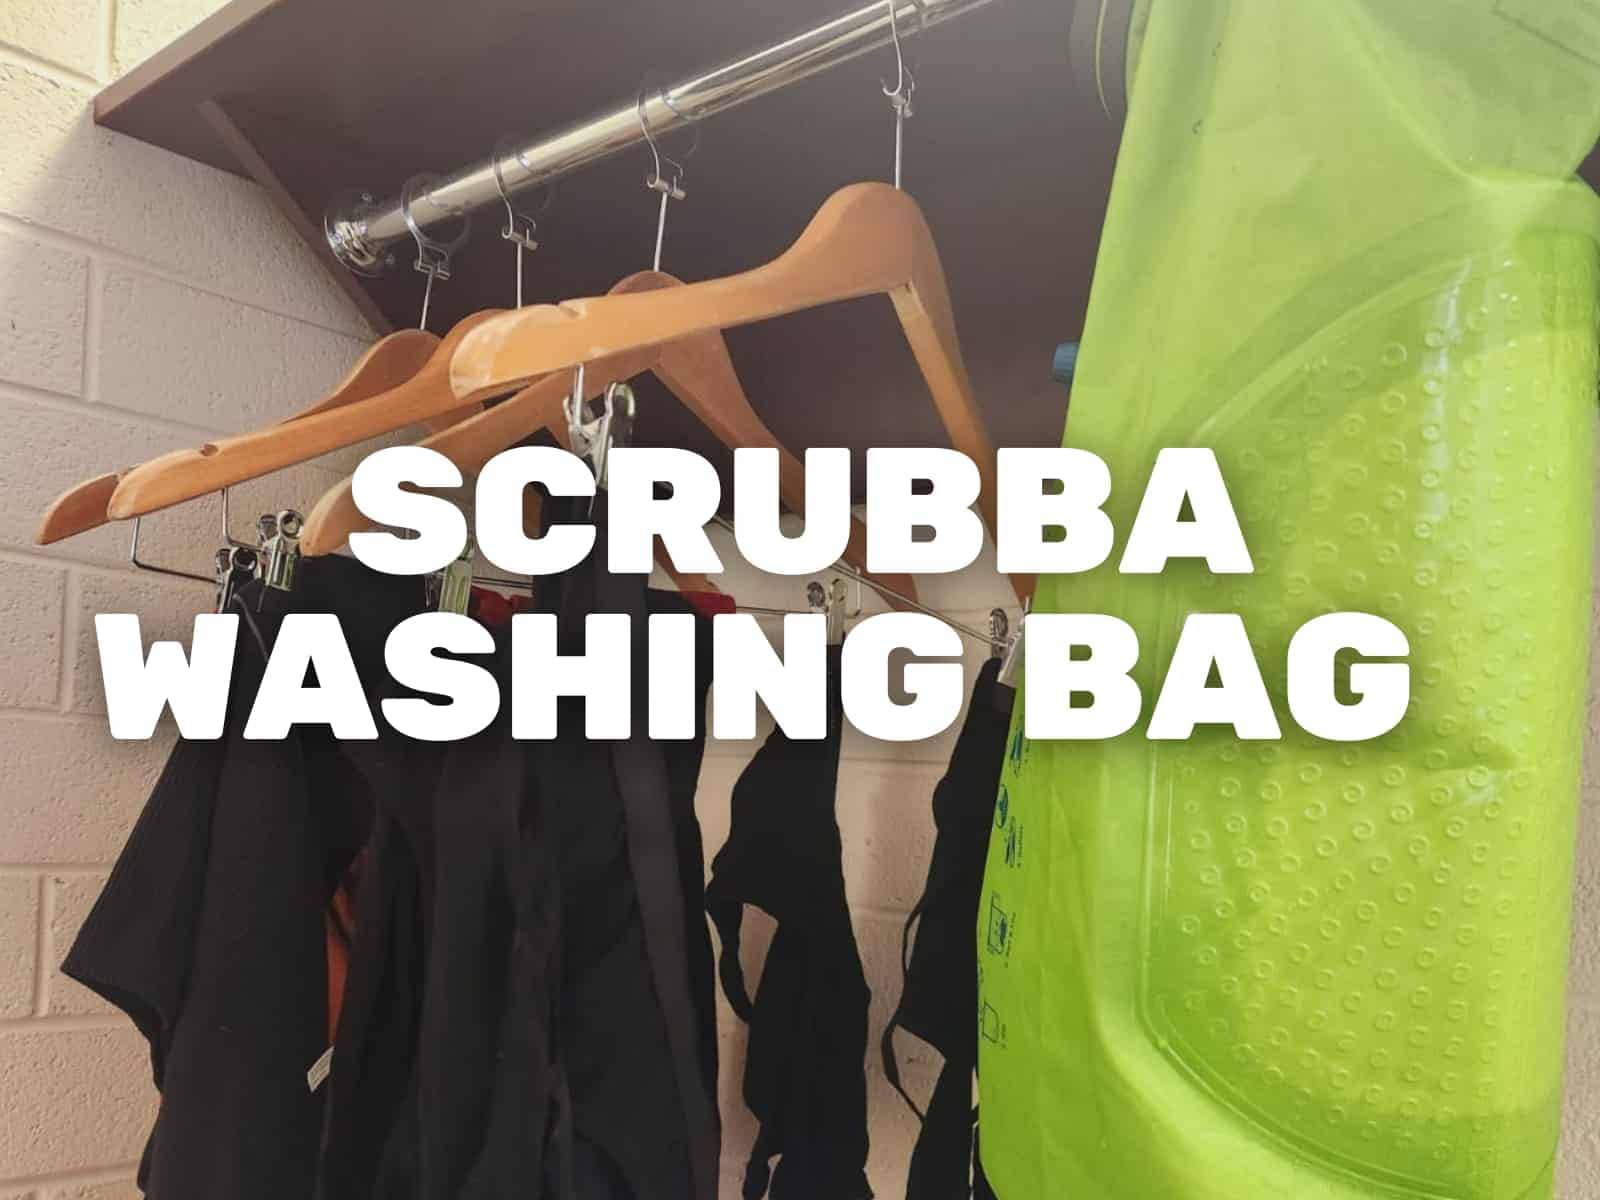 The Scrubba Wash Bag added a new photo. - The Scrubba Wash Bag